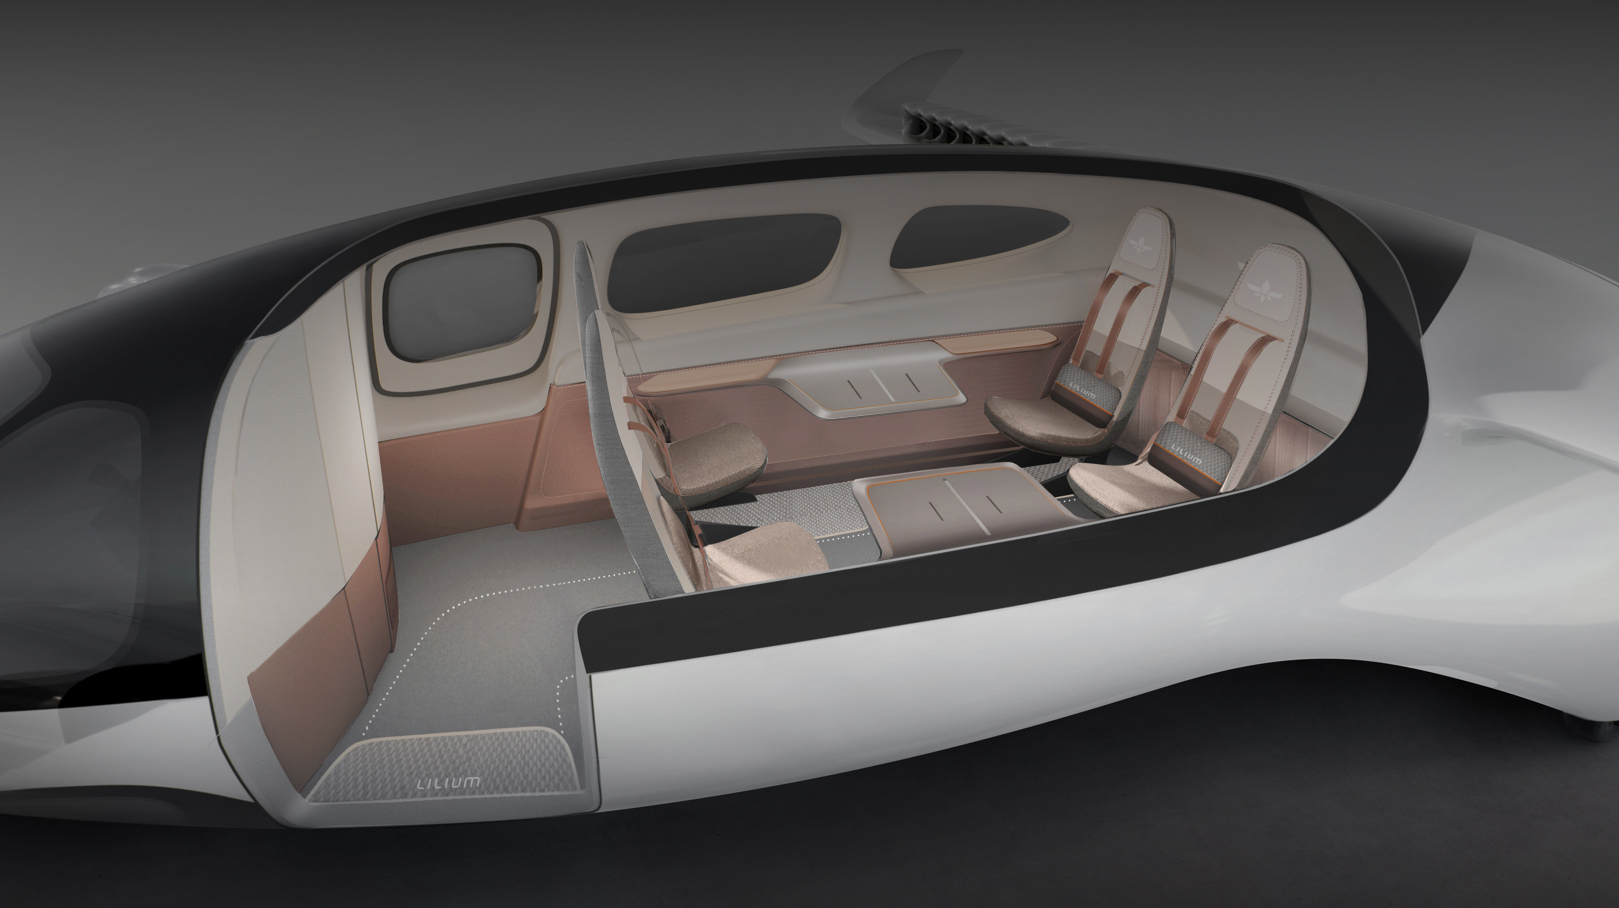 A perspective into the 4 passenger seat Lilium Jet club configuration